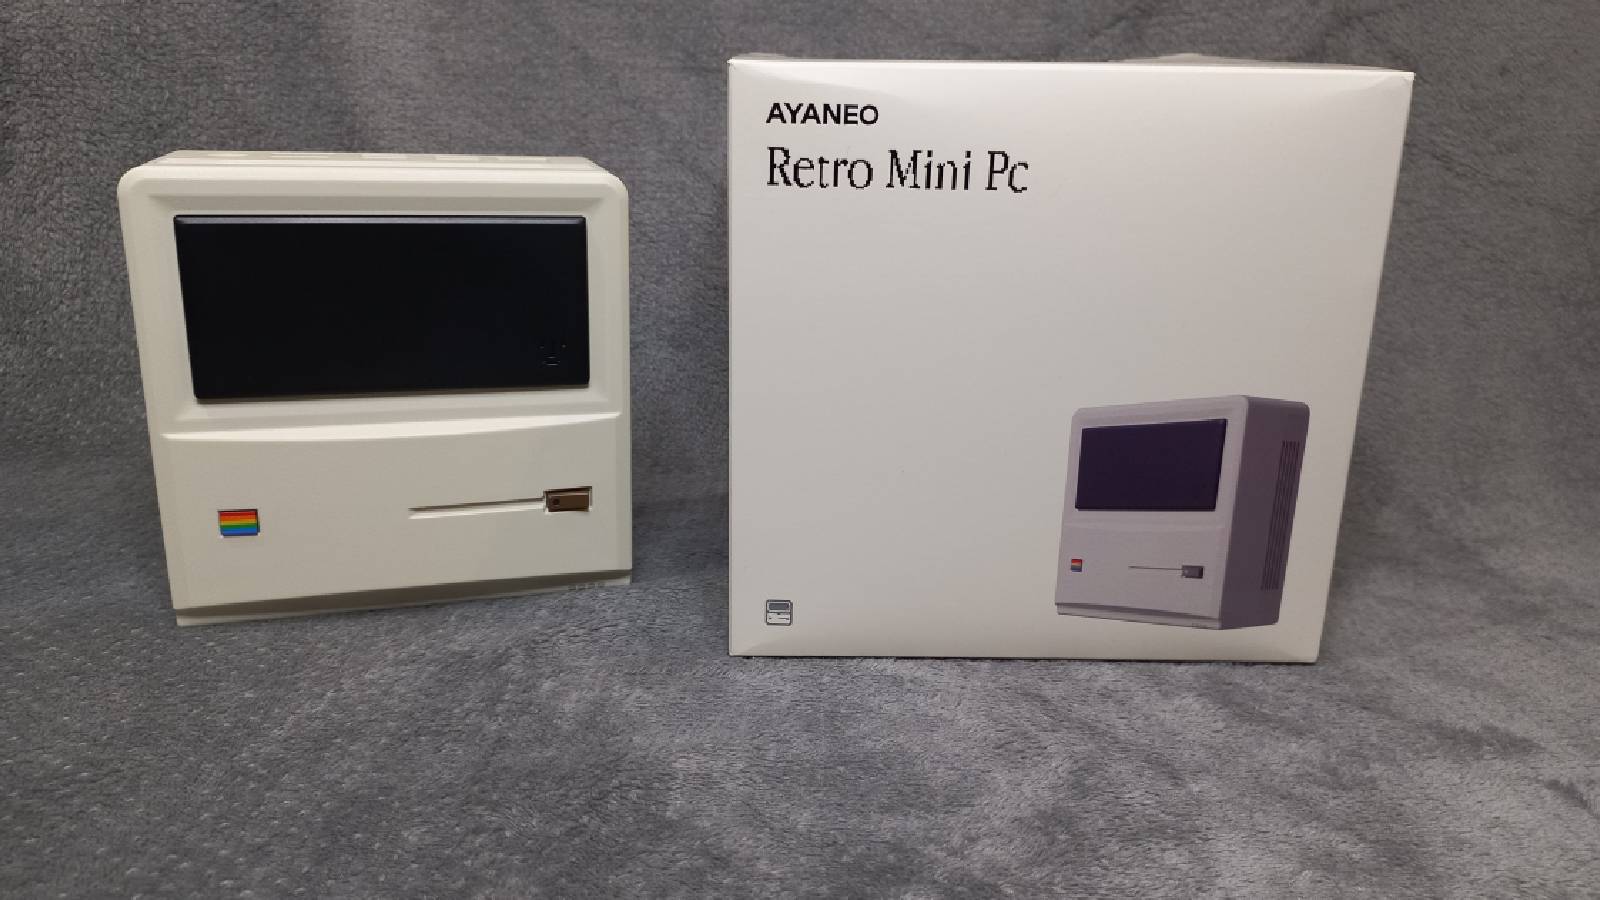 Ayaneo Retro Mini PC AM01 with box